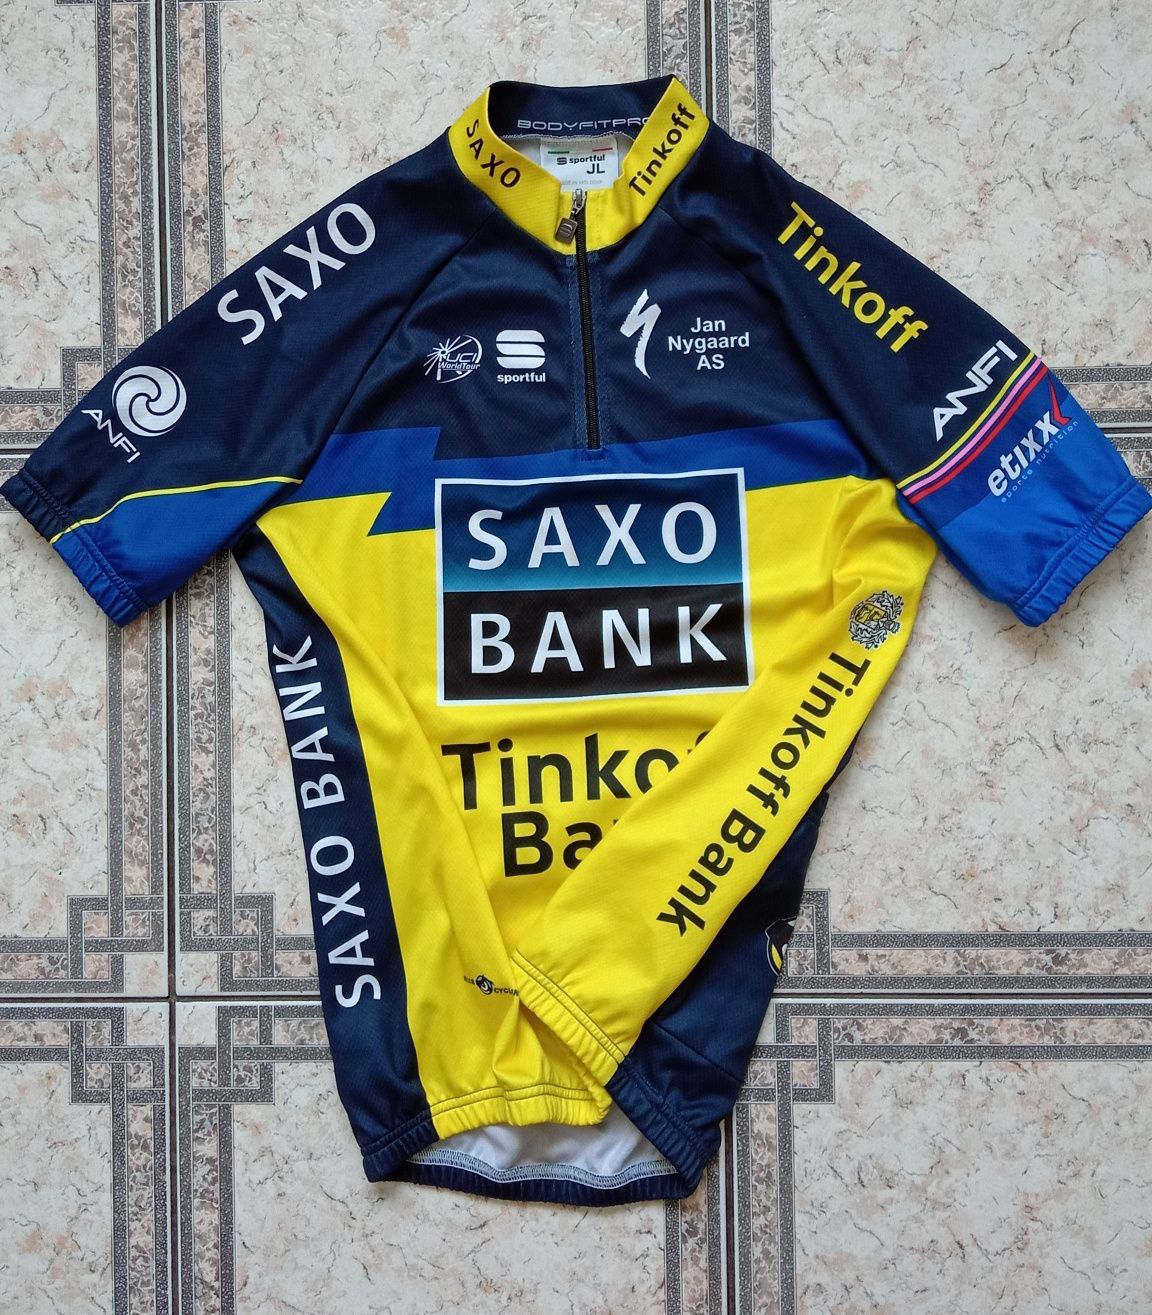 Sportful SaxoBank Tinkoff koszulka rowerowa chłopięca junior L,152-158